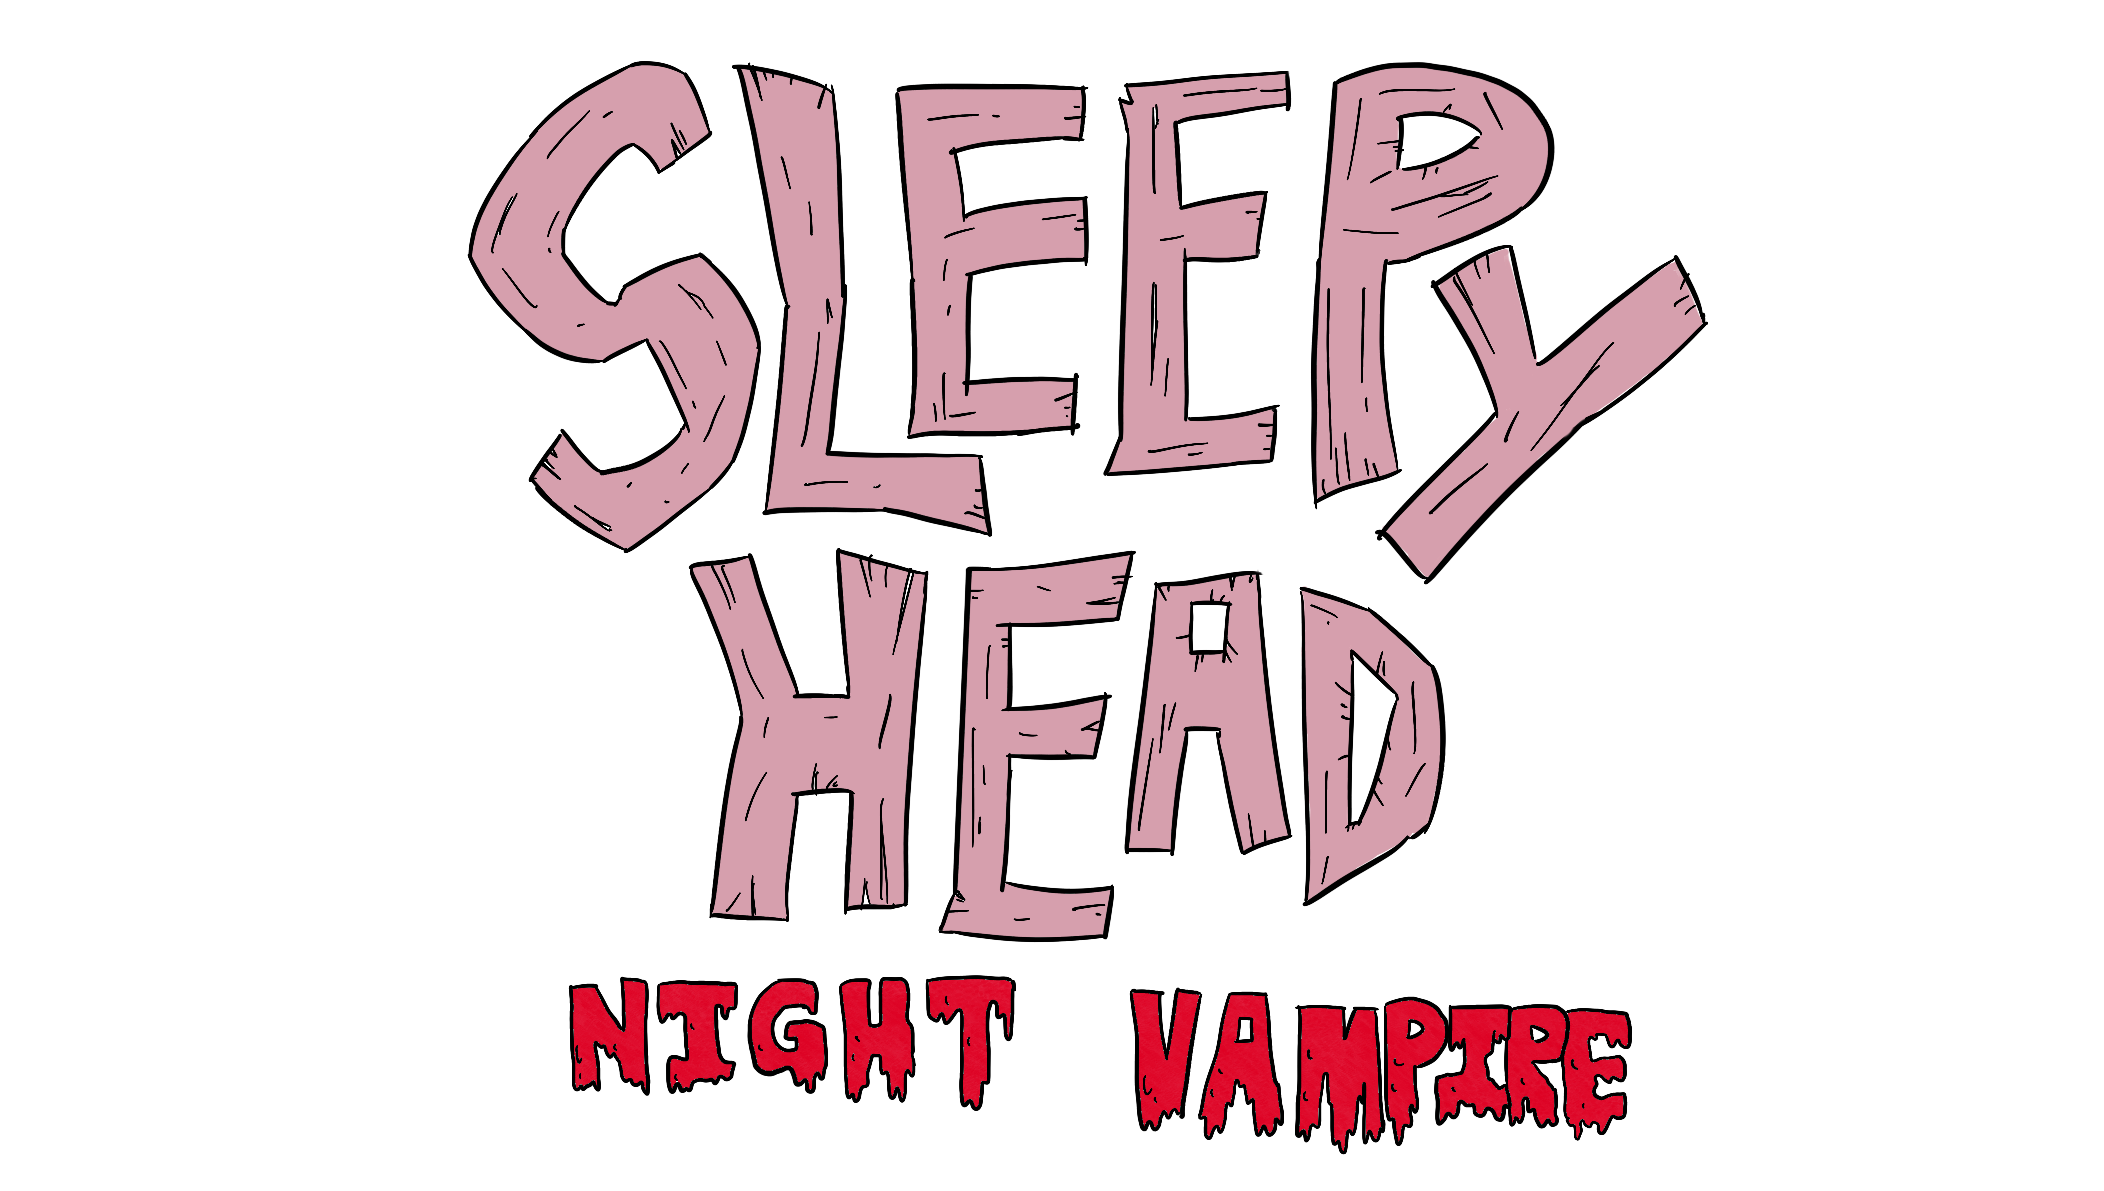 SLEEPYHEAD VOL. 2: NIGHT OF THE VAMPIRE